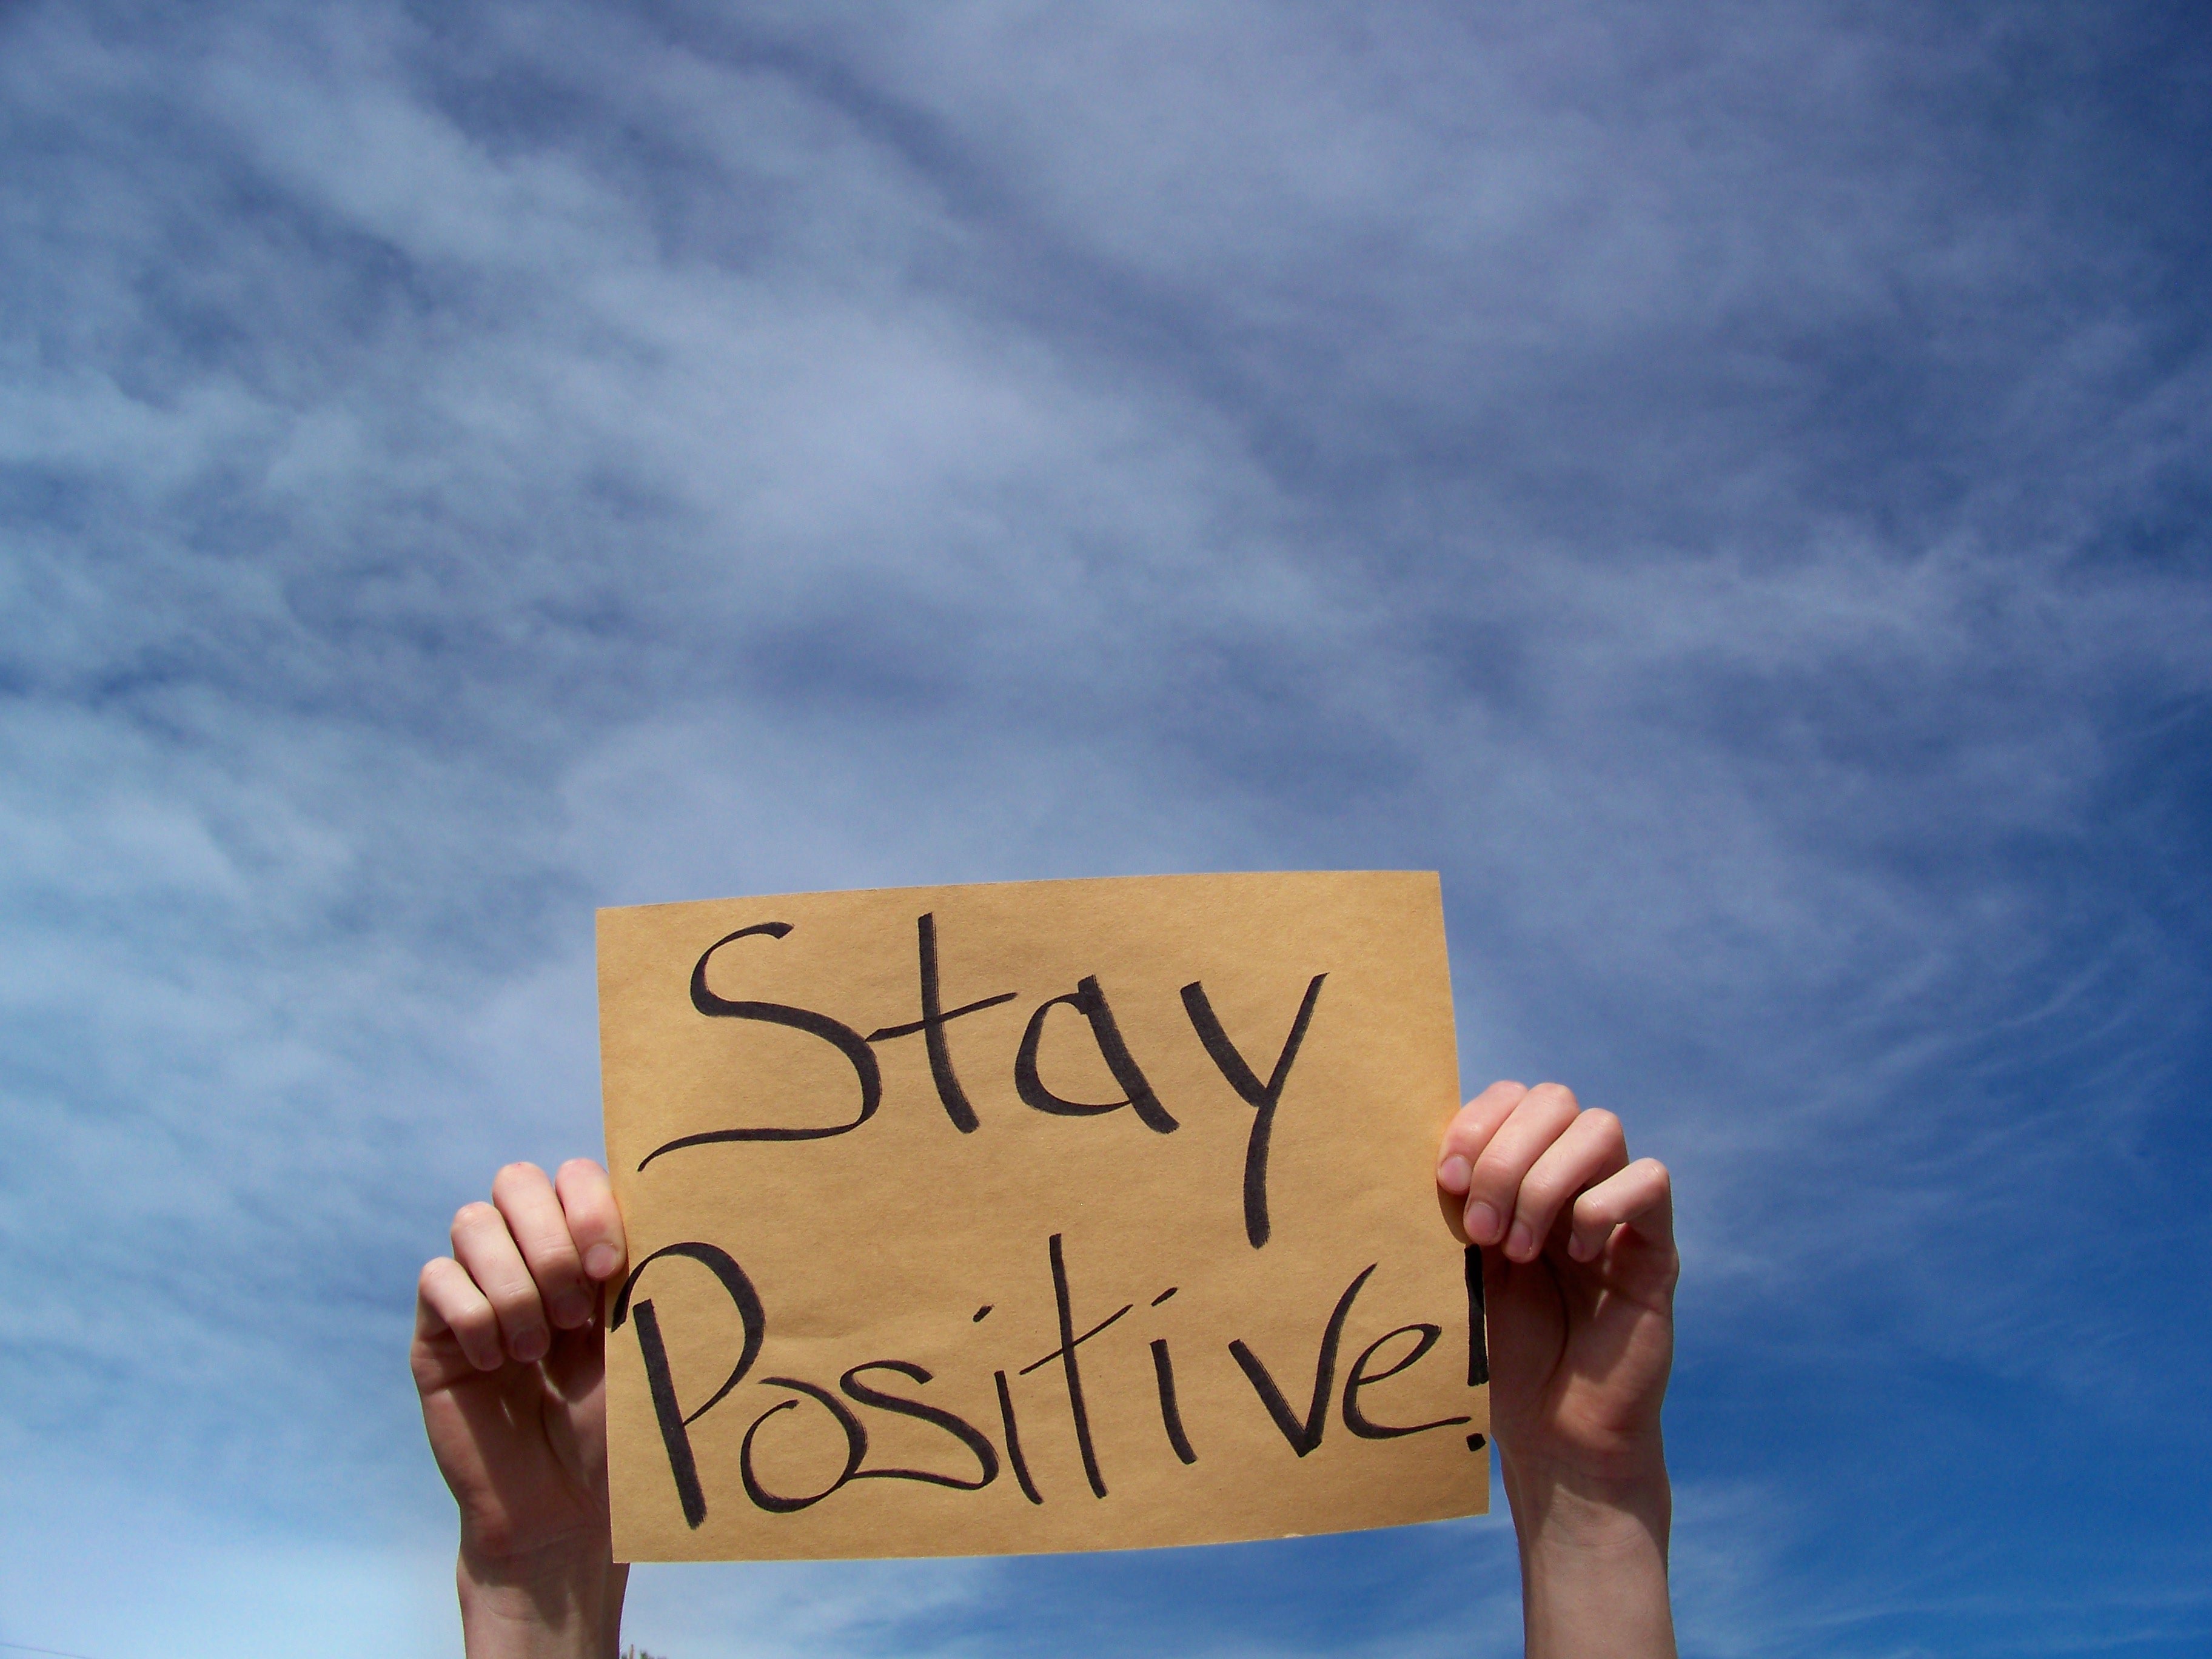 Live i do you want. Positive картинки. Think positive картинки. Stay positive картинки. Stay positive обои.